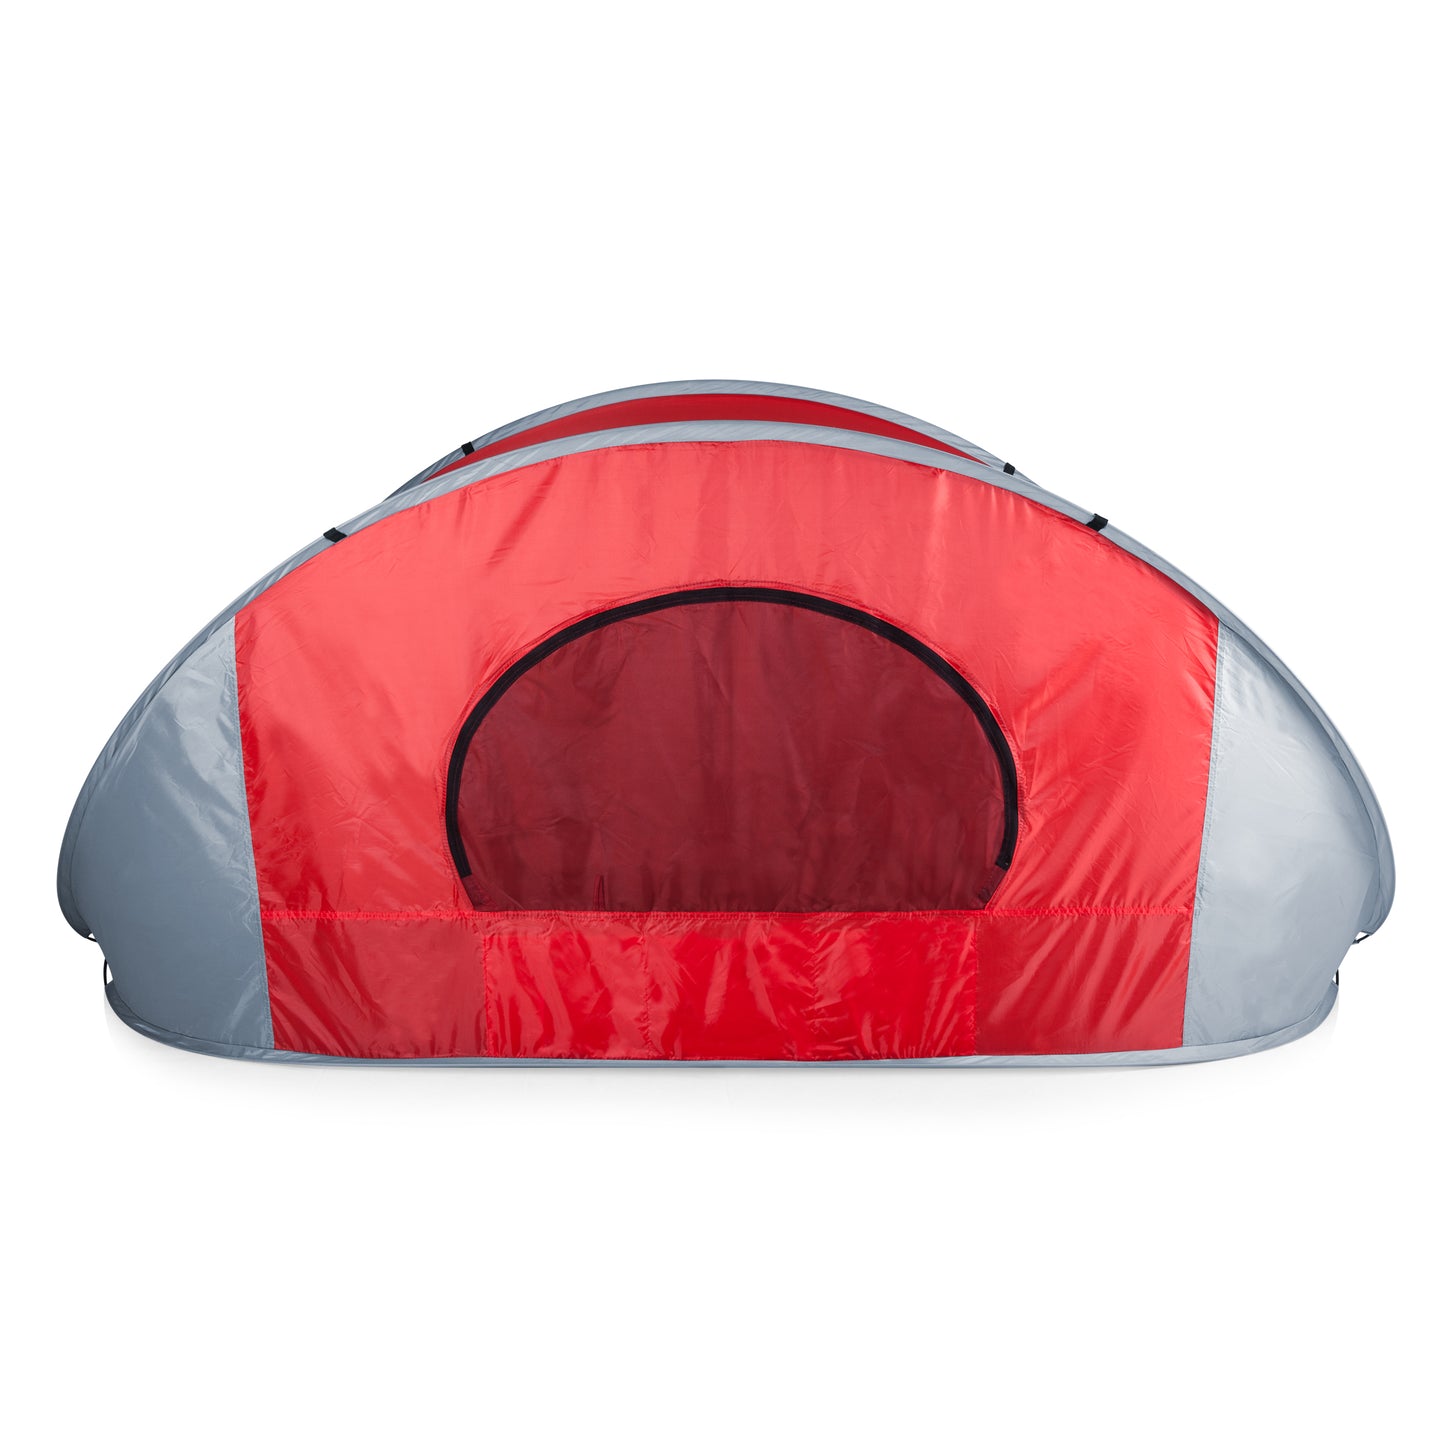 Kansas City Chiefs - Manta Portable Beach Tent